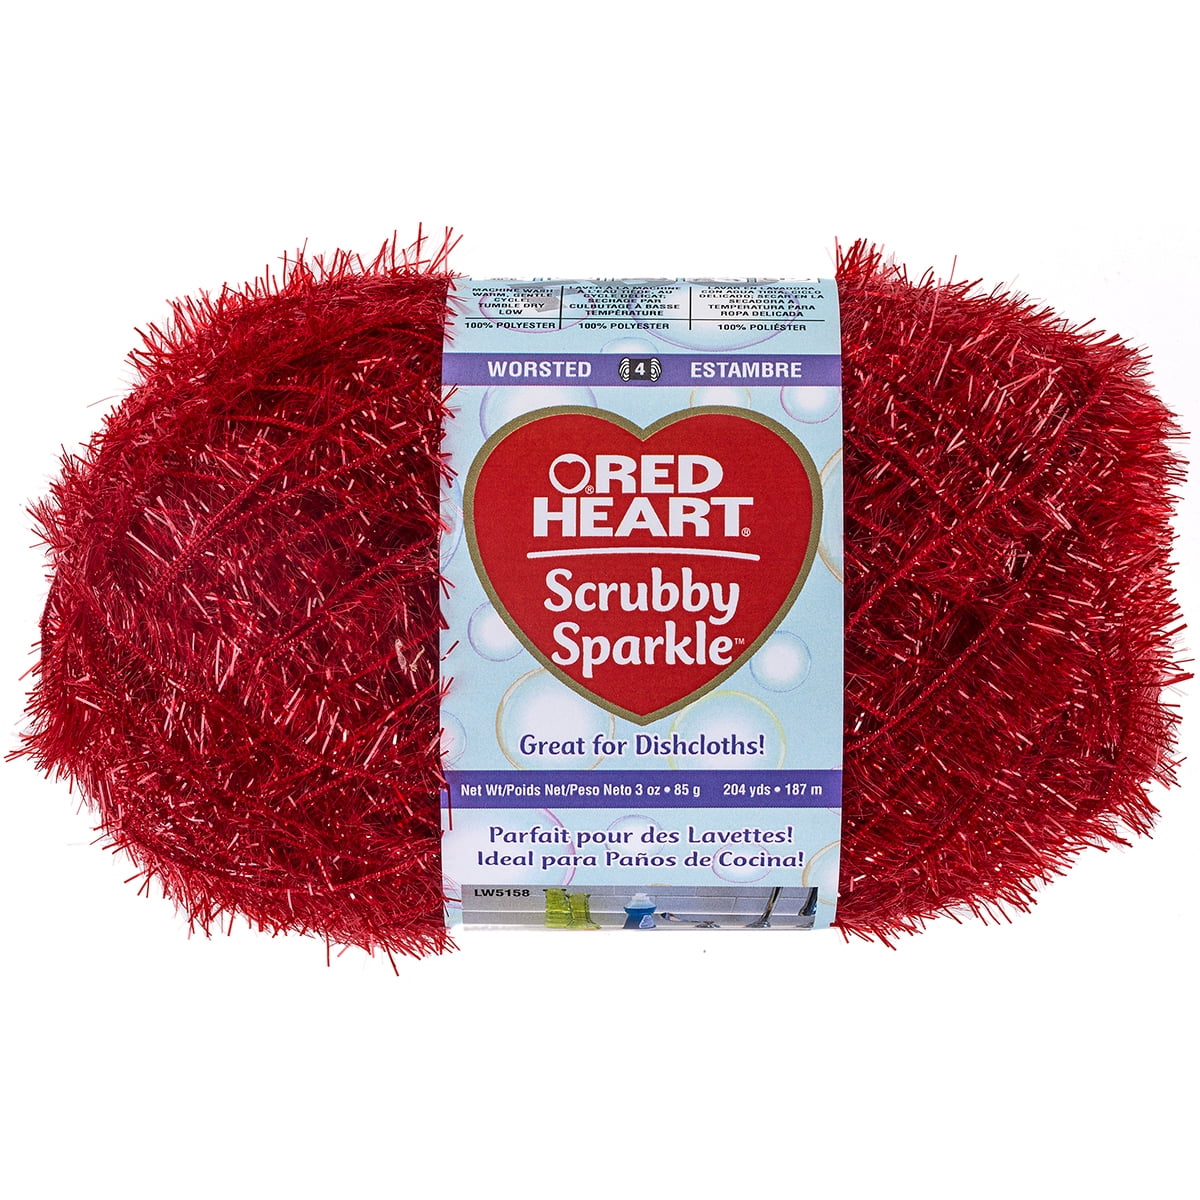 Red Heart Scrubby Sparkle Orange Yarn - 3 Pack Of 85g/3oz - Polyester - 4  Medium (worsted) - 174 Yards - Knitting/crochet : Target